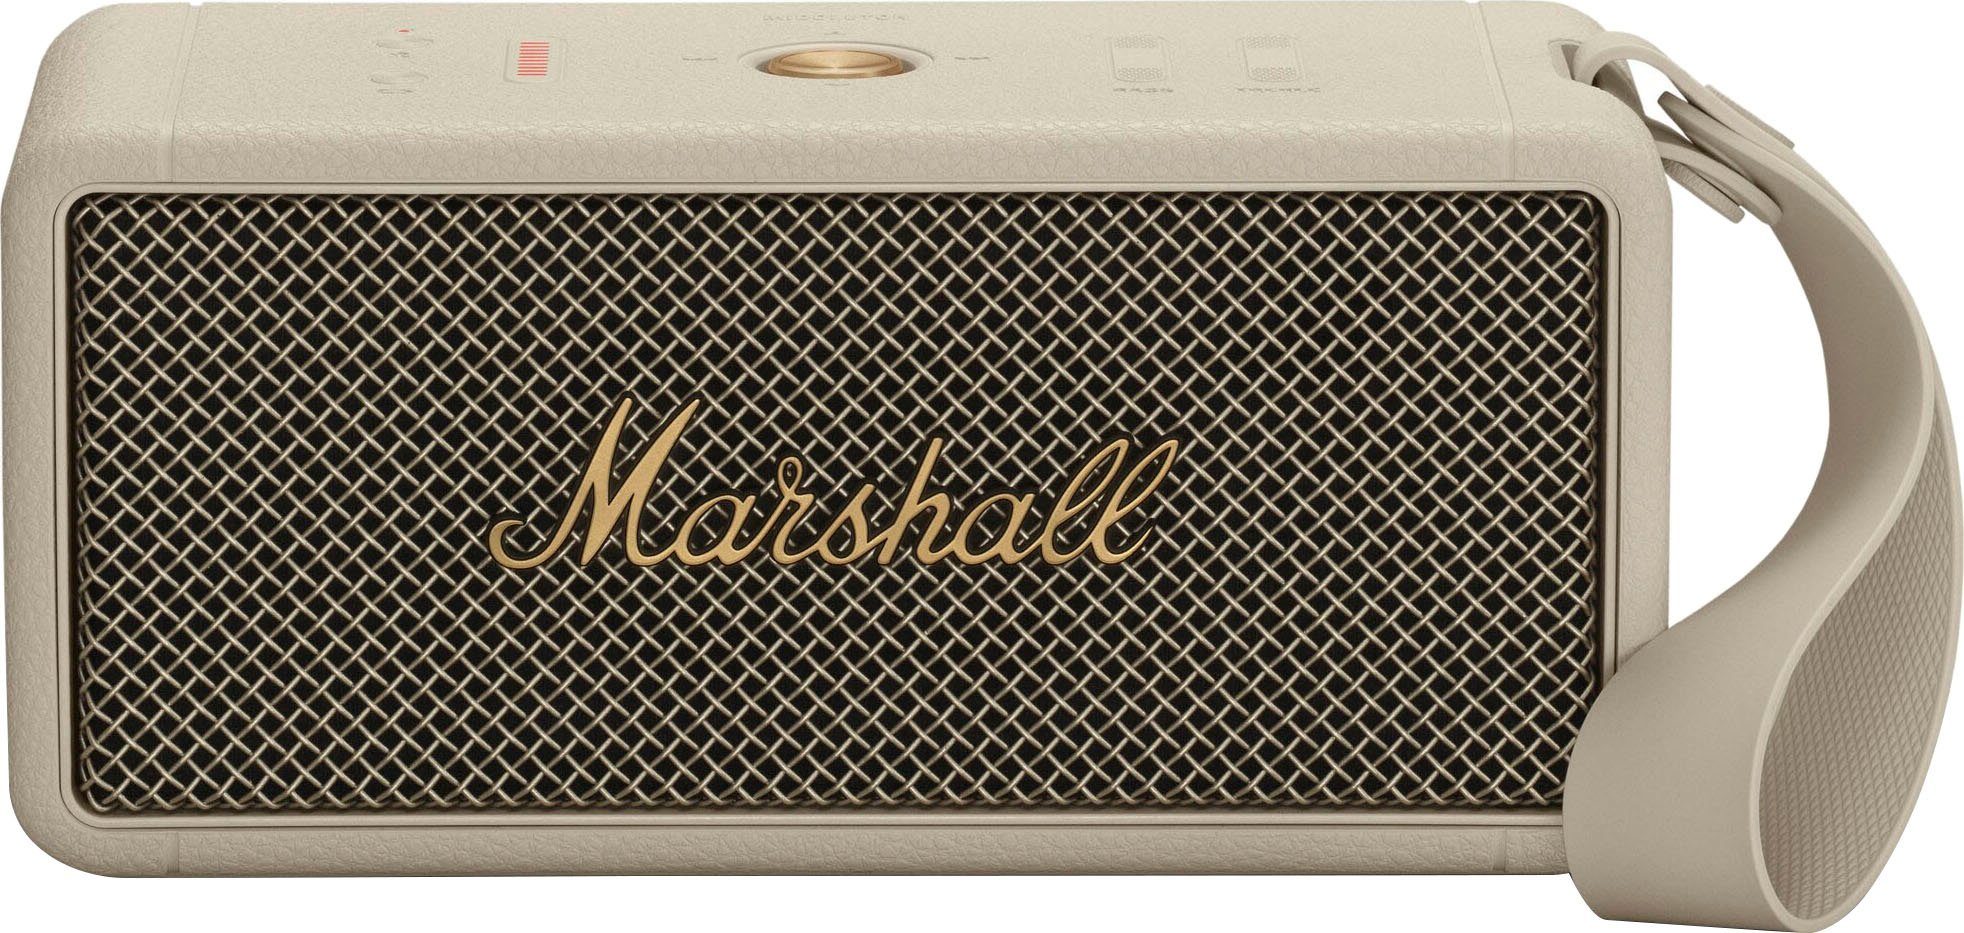 Marshall Middleton Stereo Колонки (Bluetooth, 110 W)